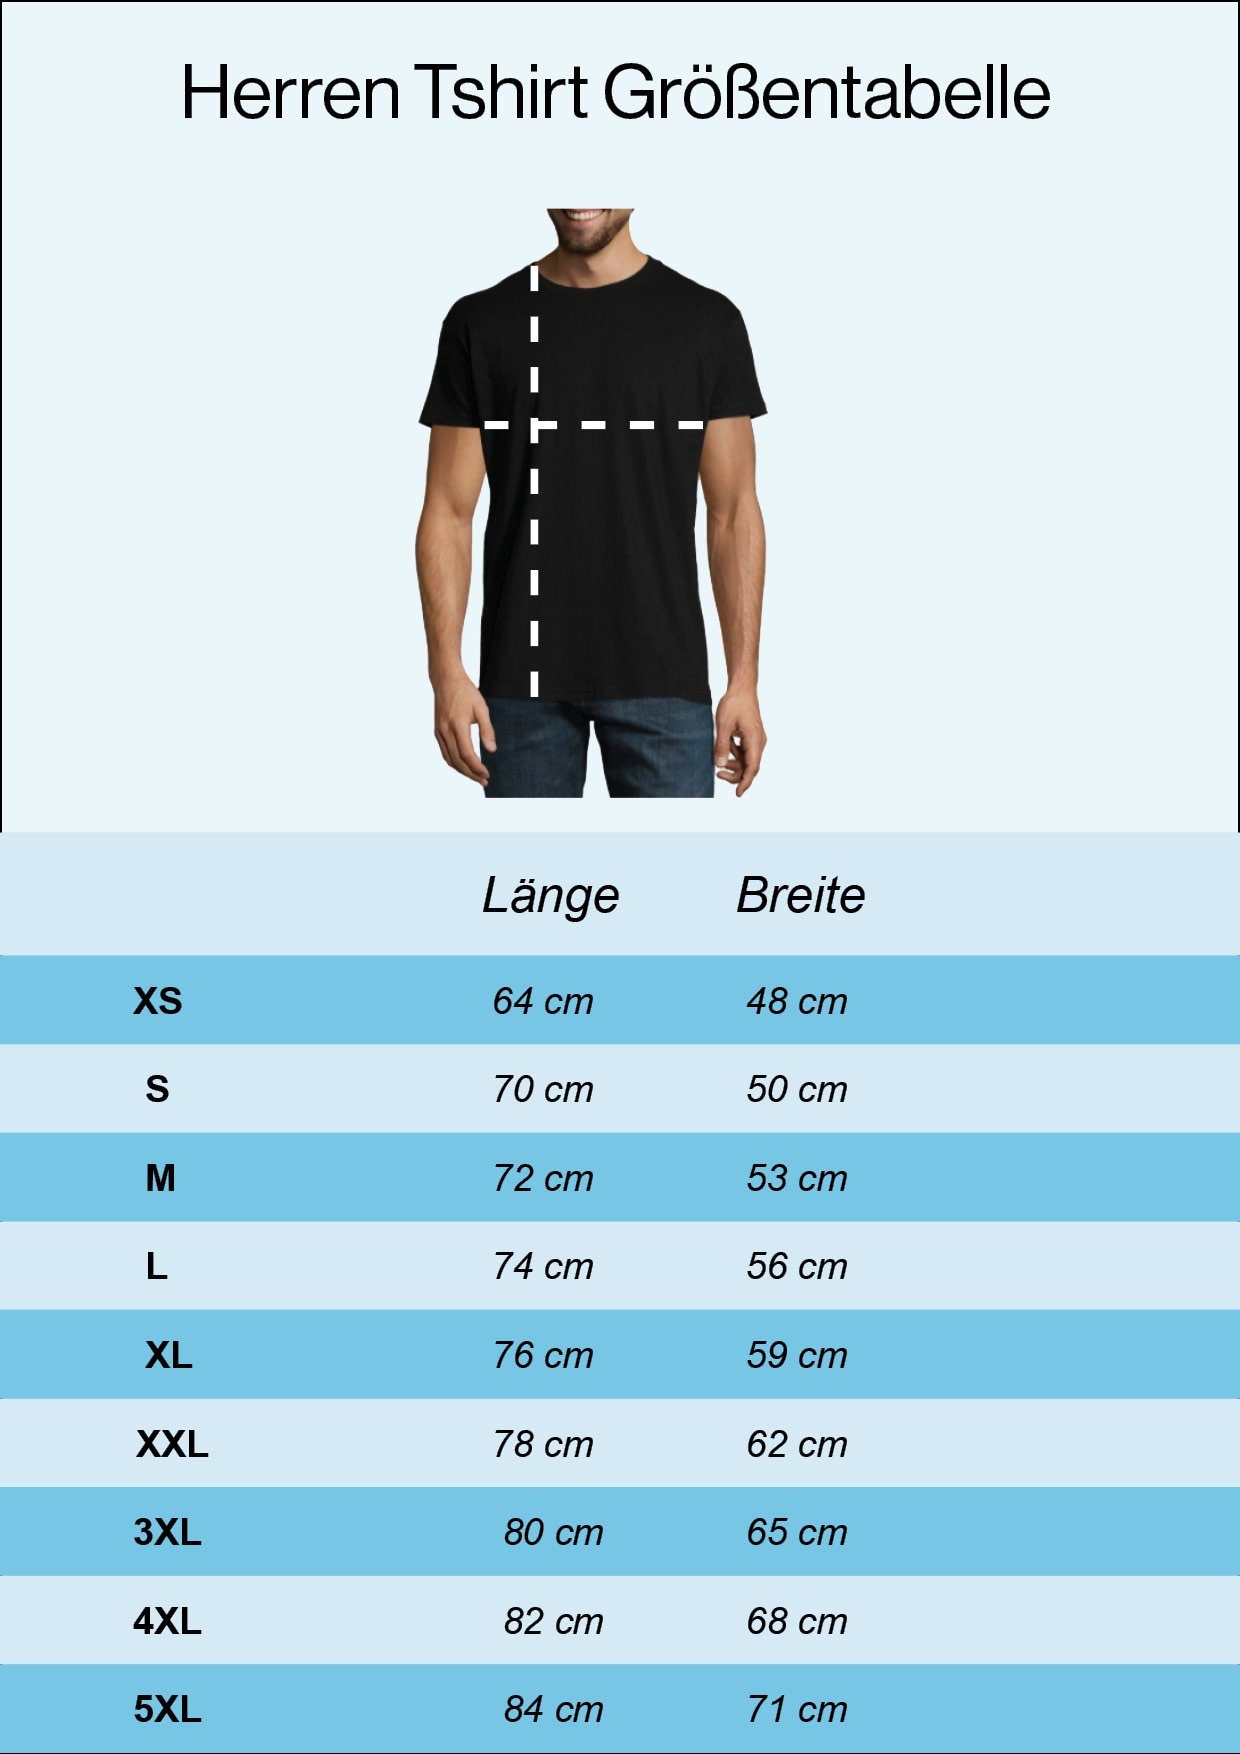 Youth Designz T-Shirt Modell Bazinga Herren Frontprint Rot Mit trendigem T-Shirt